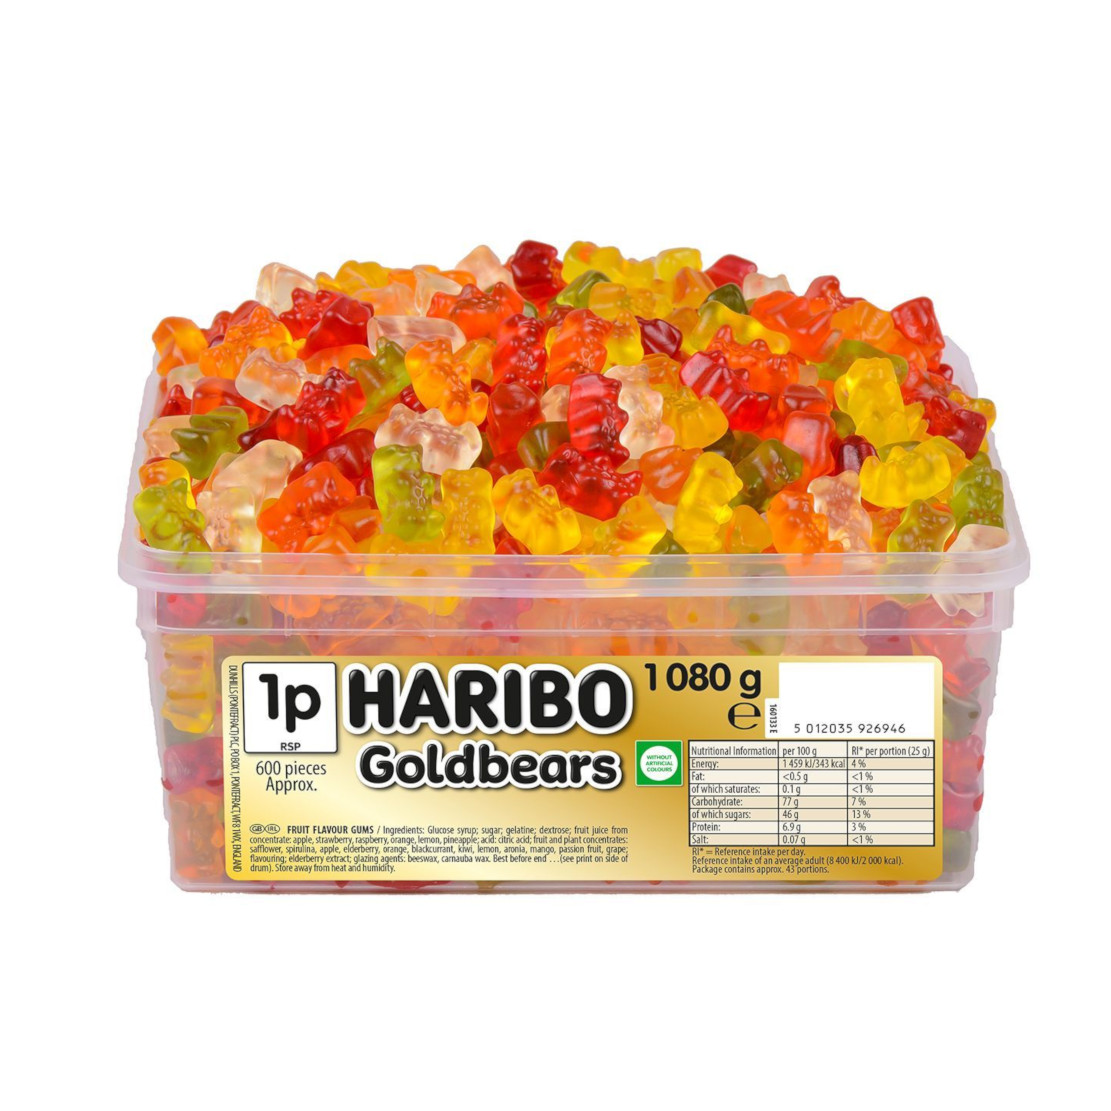 Haribo Gold Bears Tub 1080g